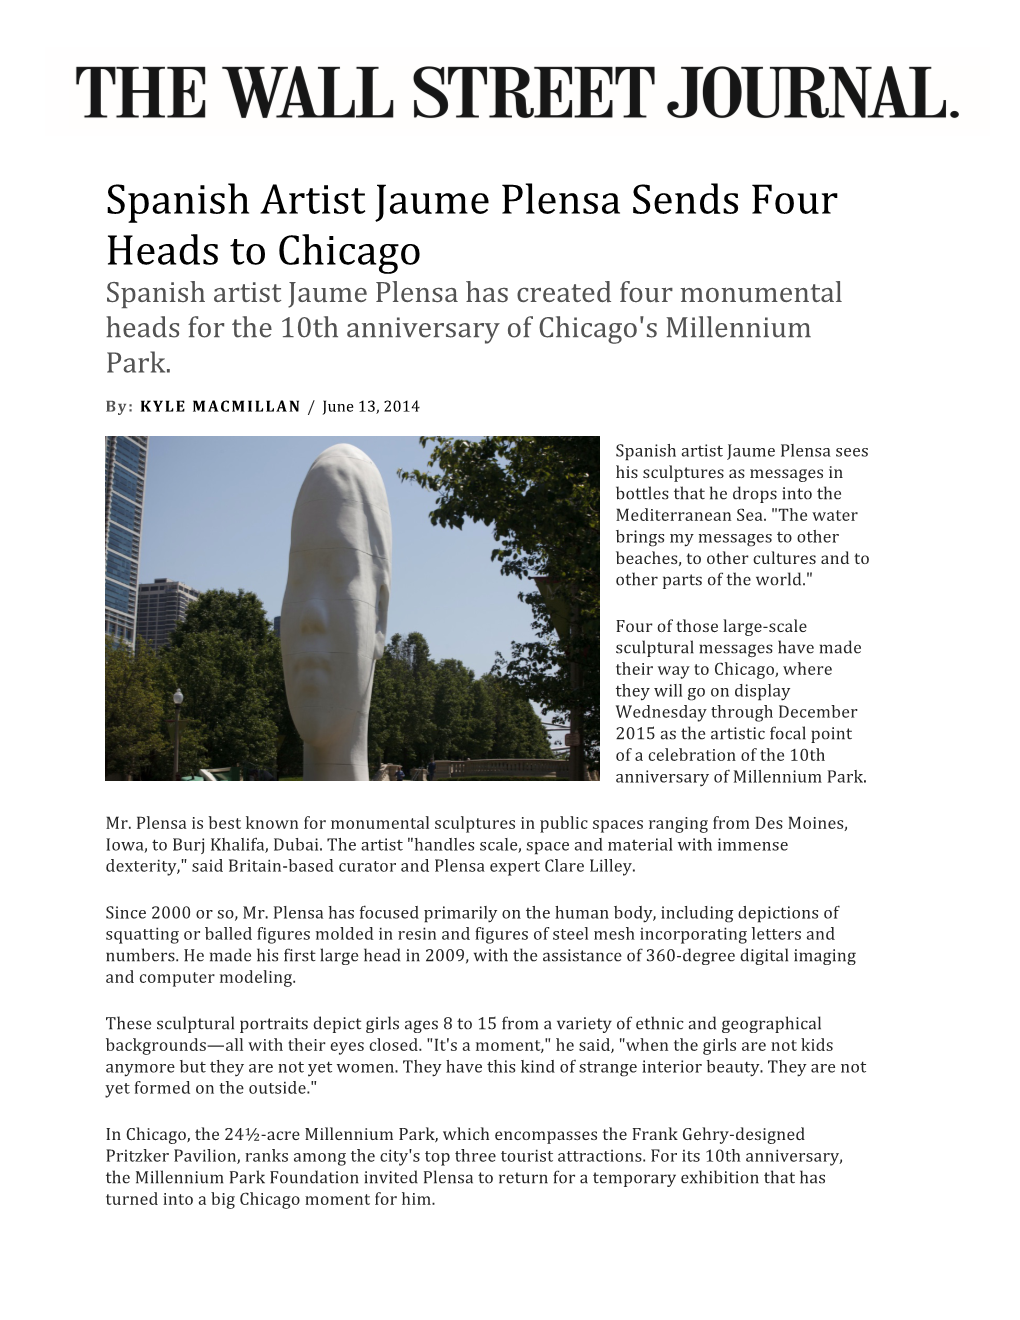 Spanish Artist Jaume Plensa Sends Four Heads to Chicago